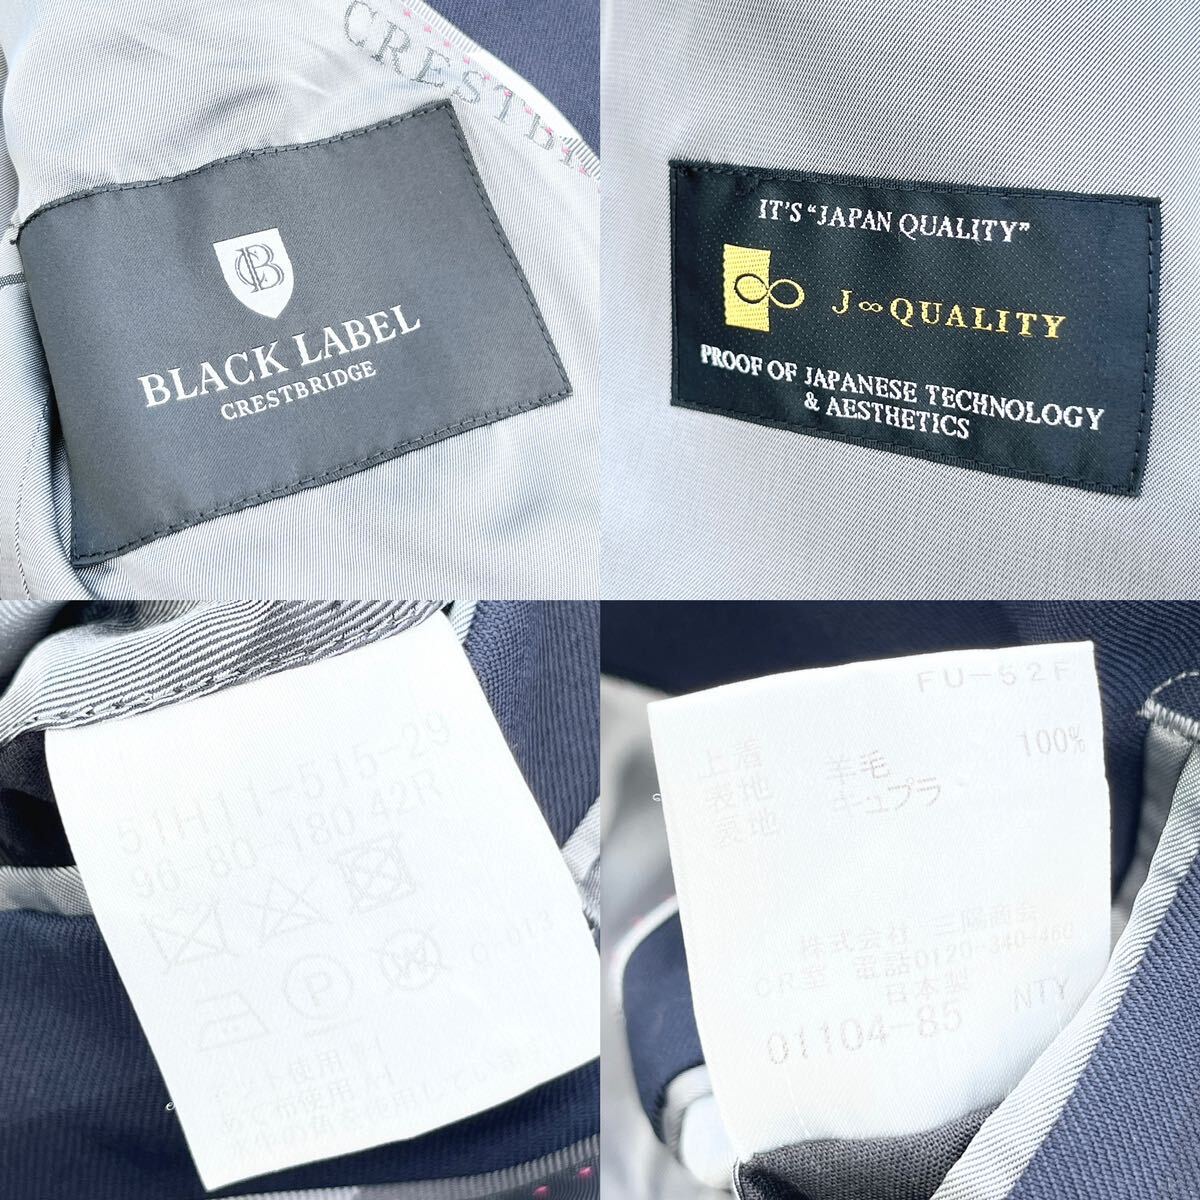 BLACKLABEL CRESTBRIDGE[ rare XL size ] Black Label k rest b Ricci suit setup shadow check unlined in the back lining Logo beautiful goods 